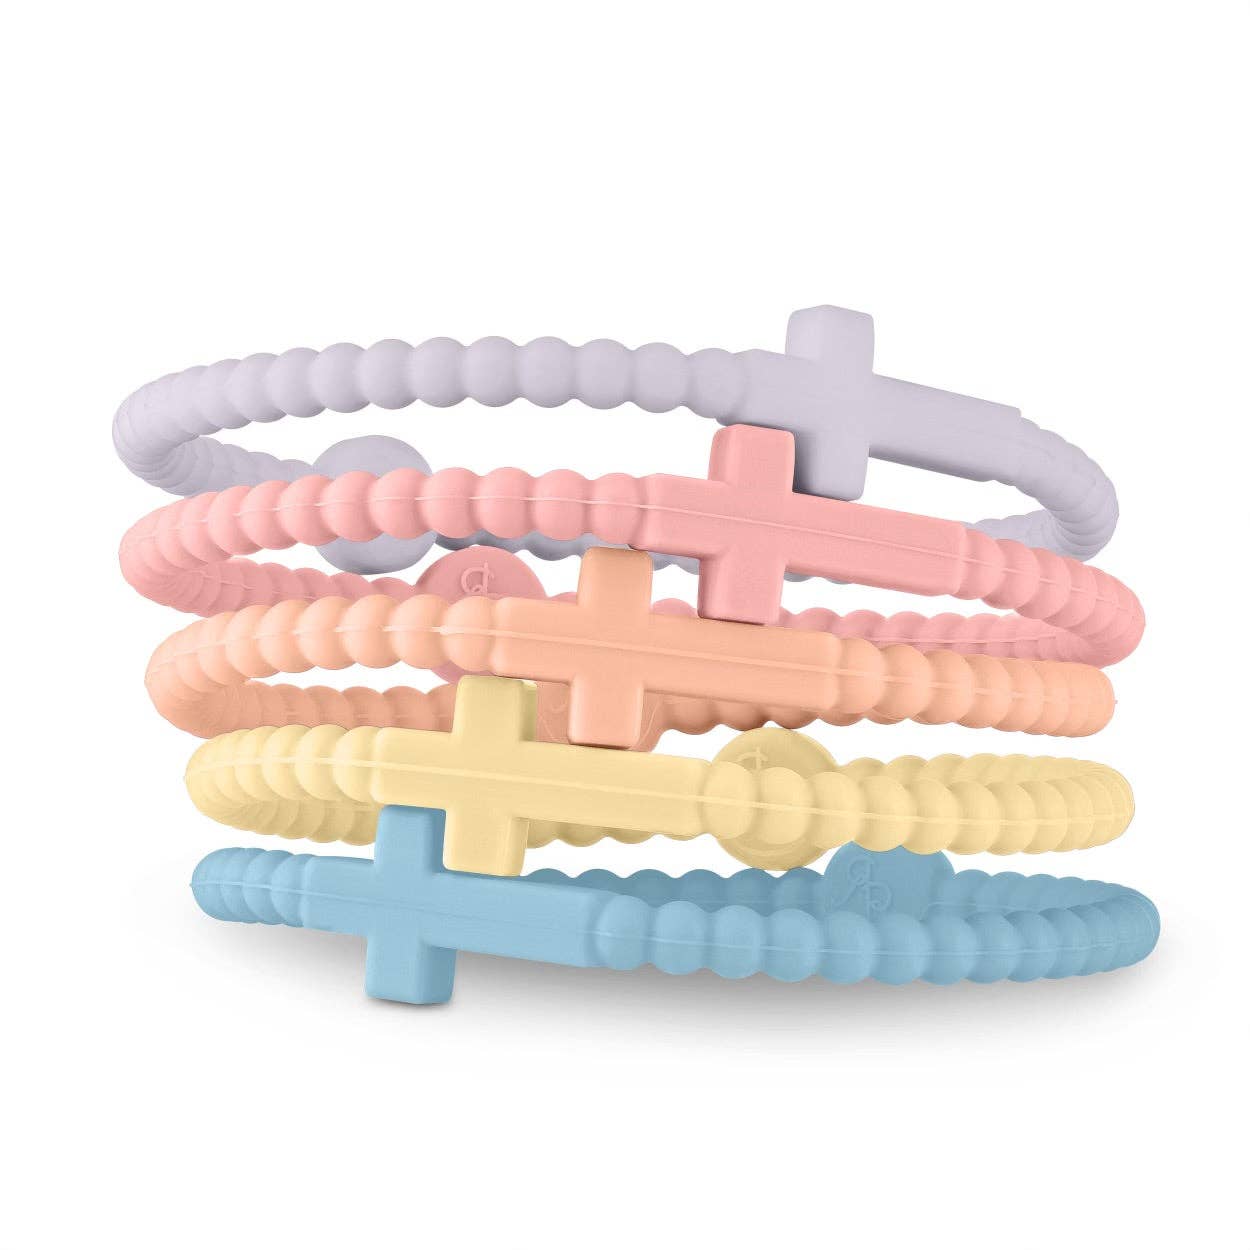 Jesus Bracelets (Cross Bracelets): Boca (5 pack) / Medium